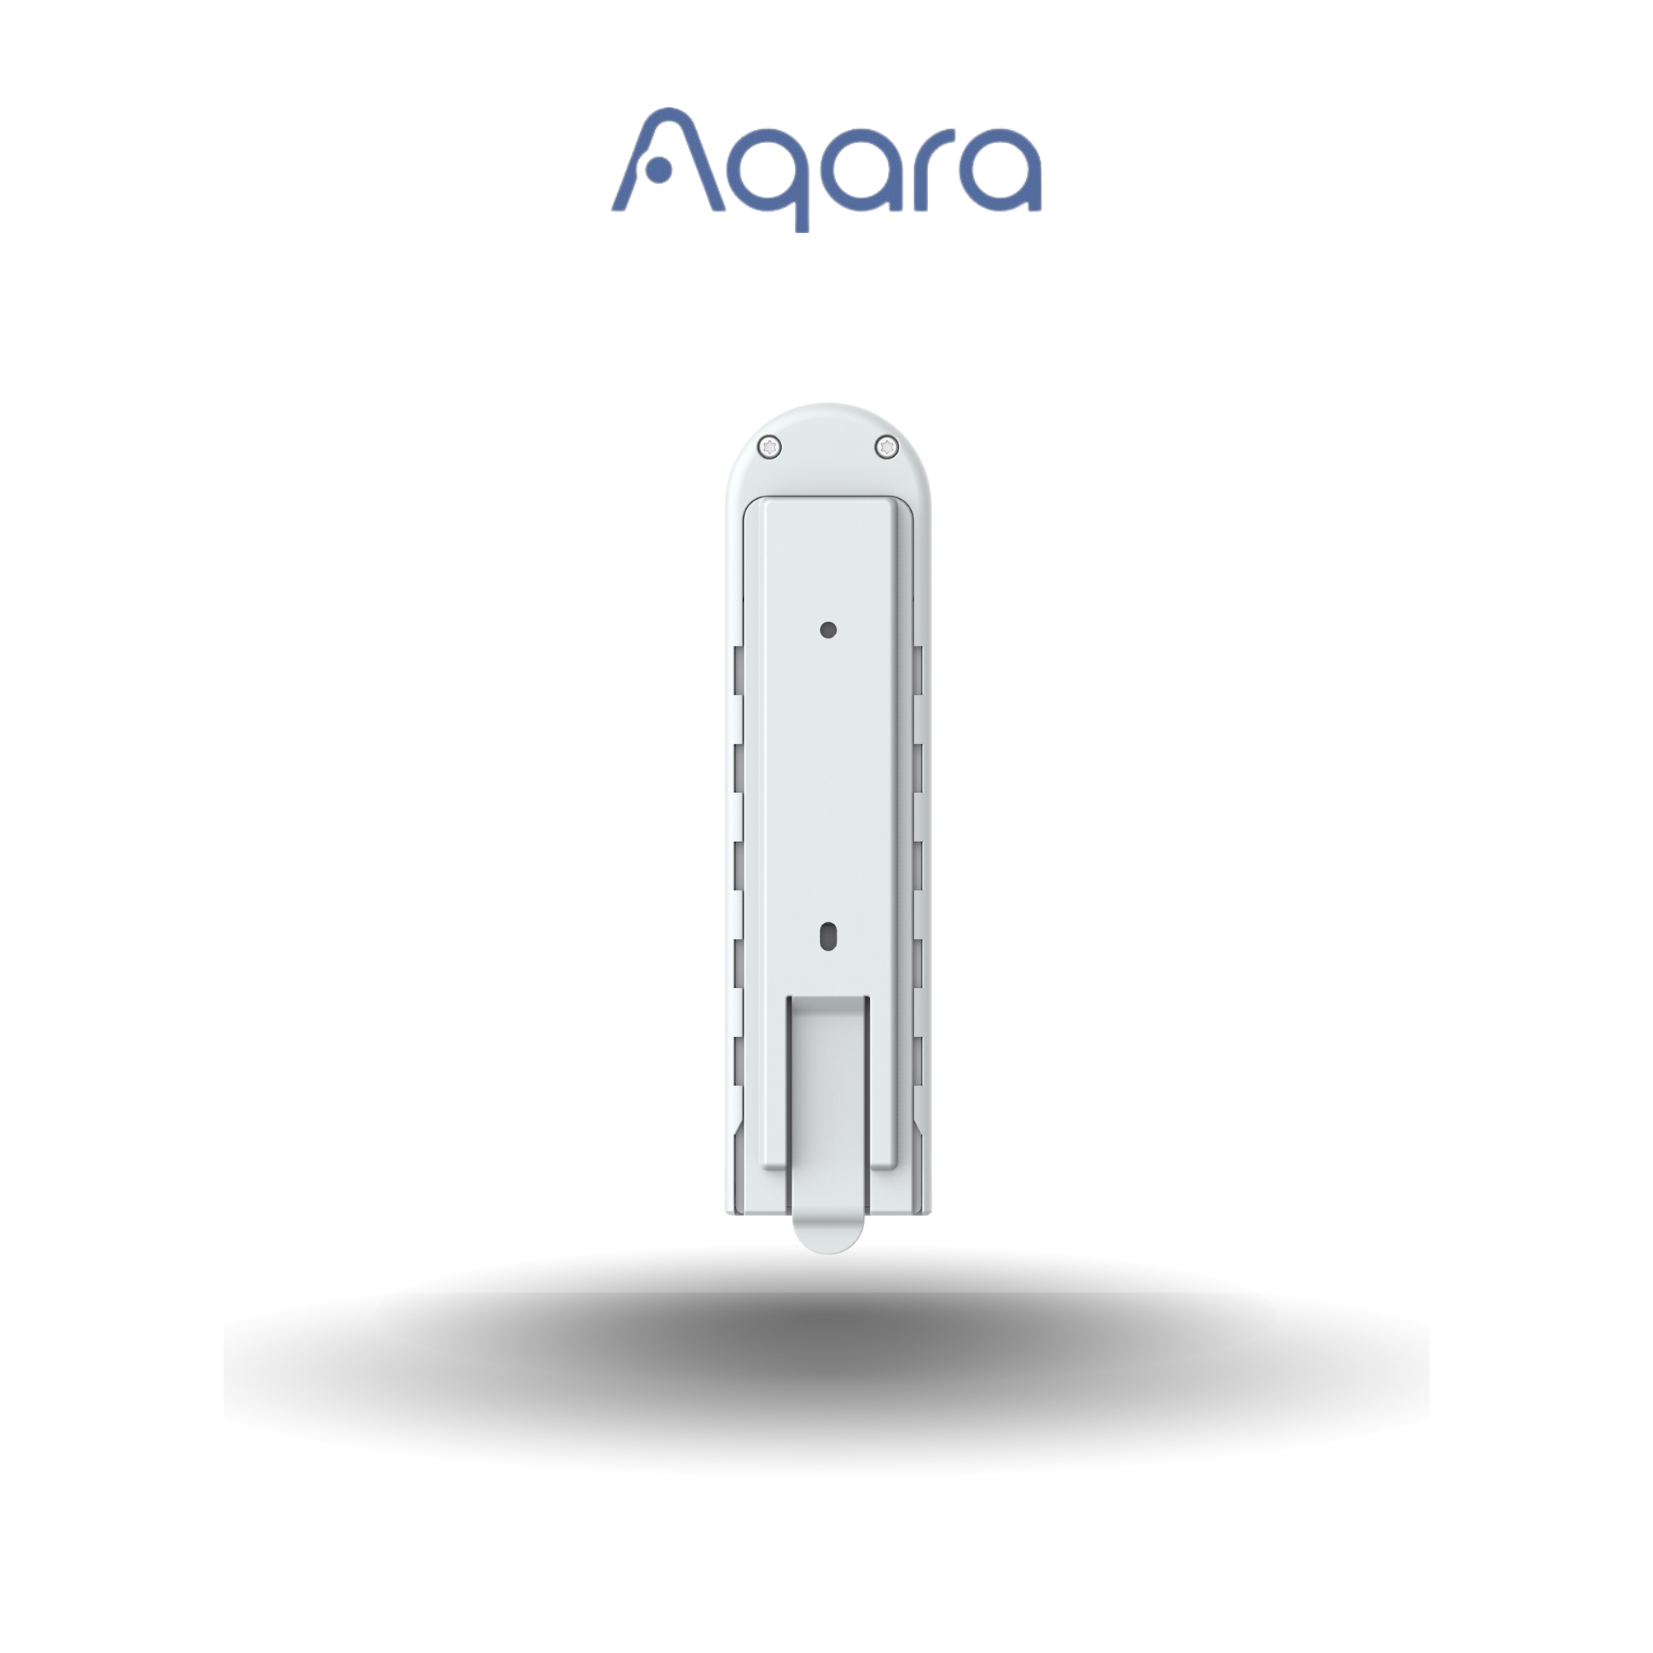 Aqara Roller Shade Driver E1 - Easy Installation Zigbee 3.0 Protocol Wide-Beaded Cord Support